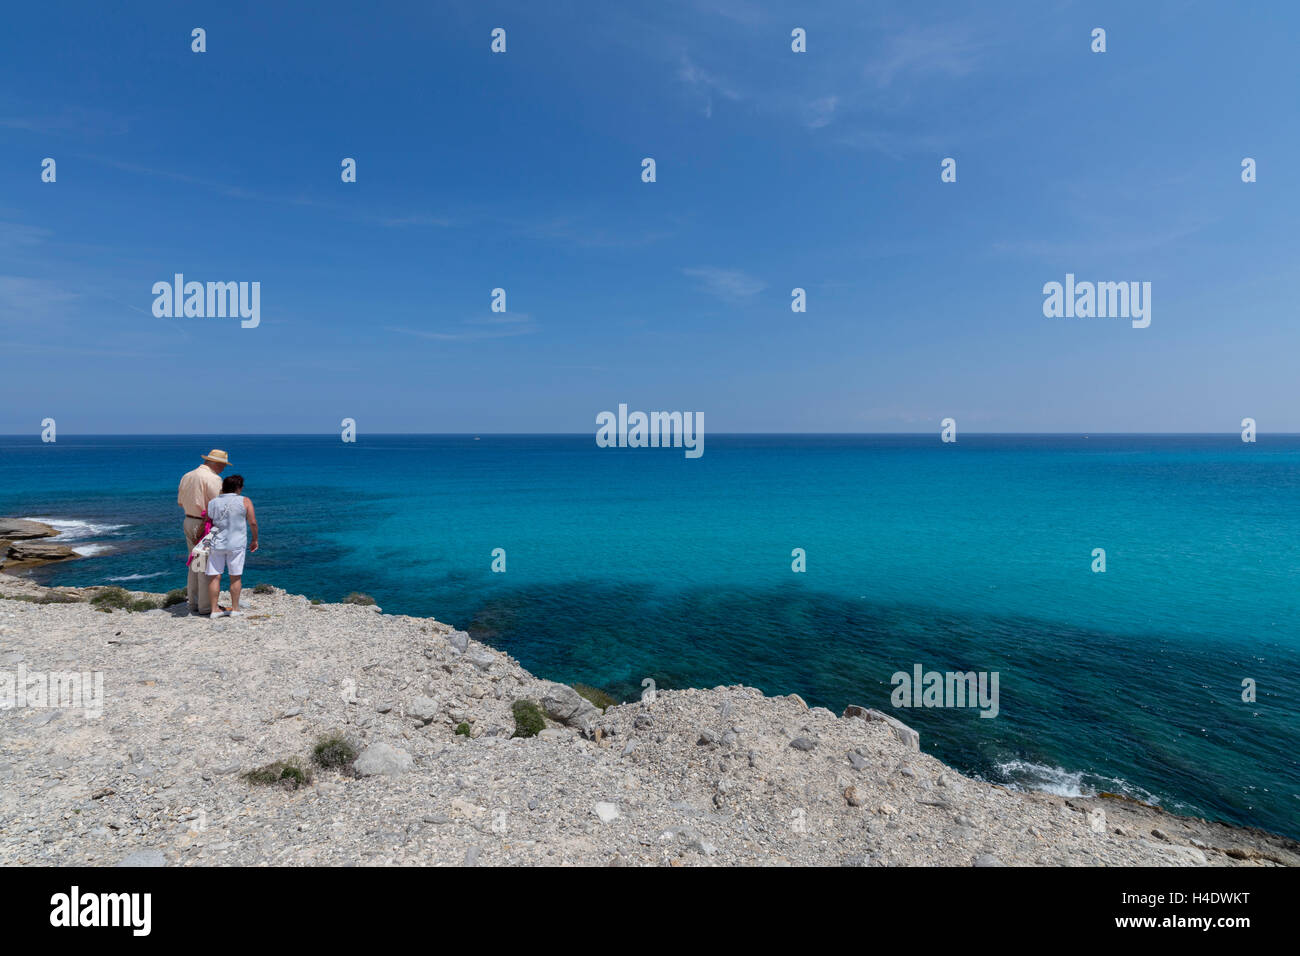 Spain, the Balearic Islands, island Majorca, Cala Mesquida, beach, tourist couple, thoughtful, sea view, Stock Photo